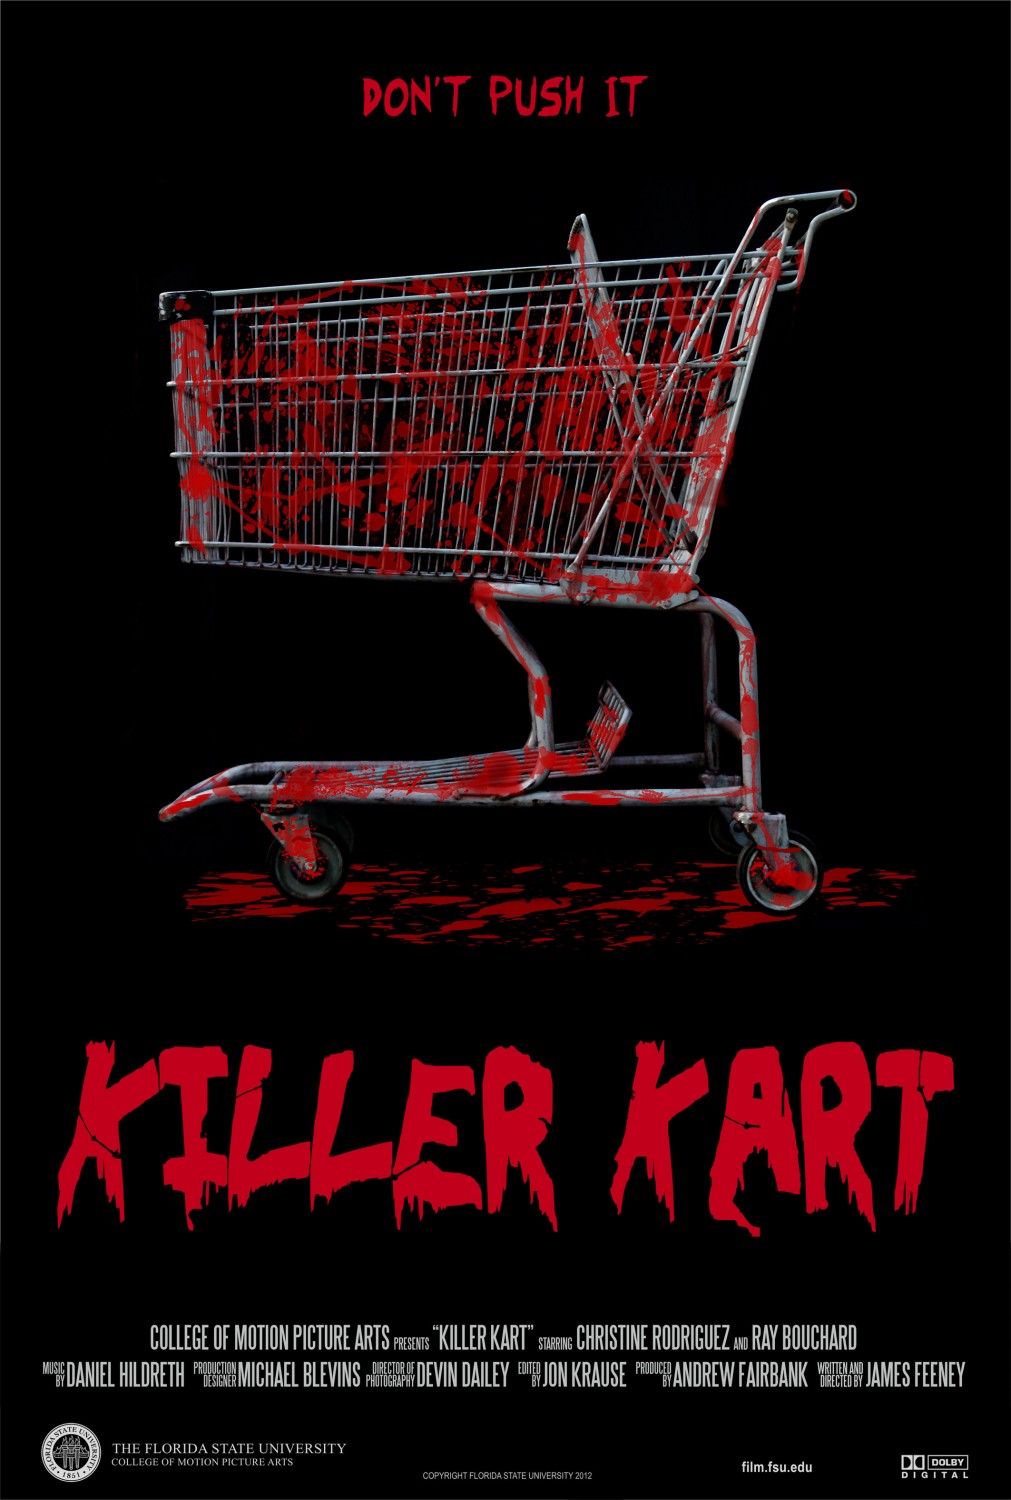 Extra Large Movie Poster Image for Killer Kart